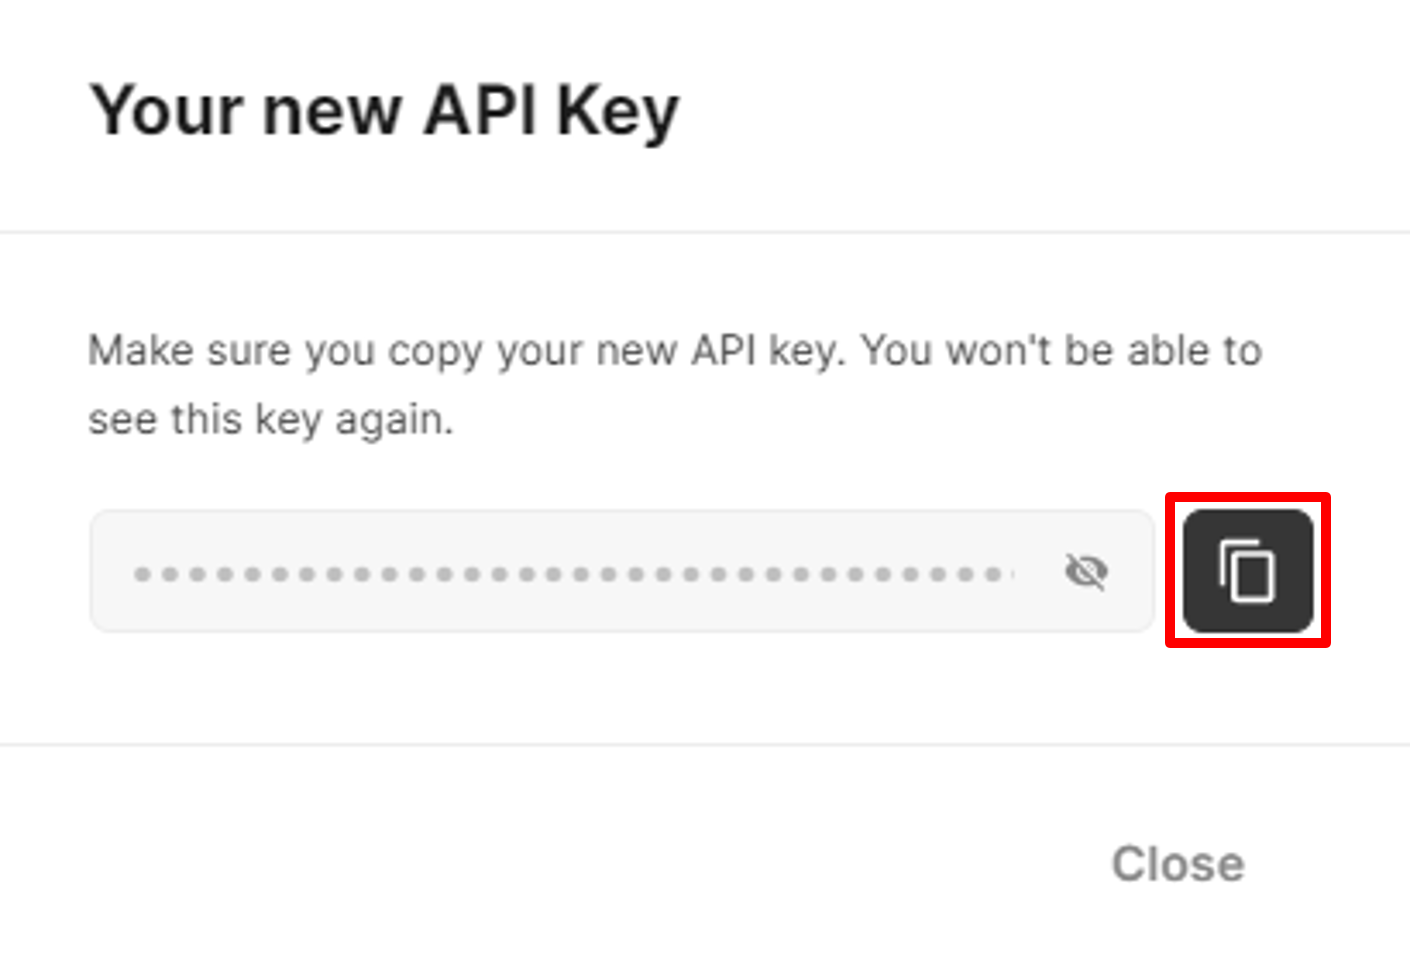 Save the API key